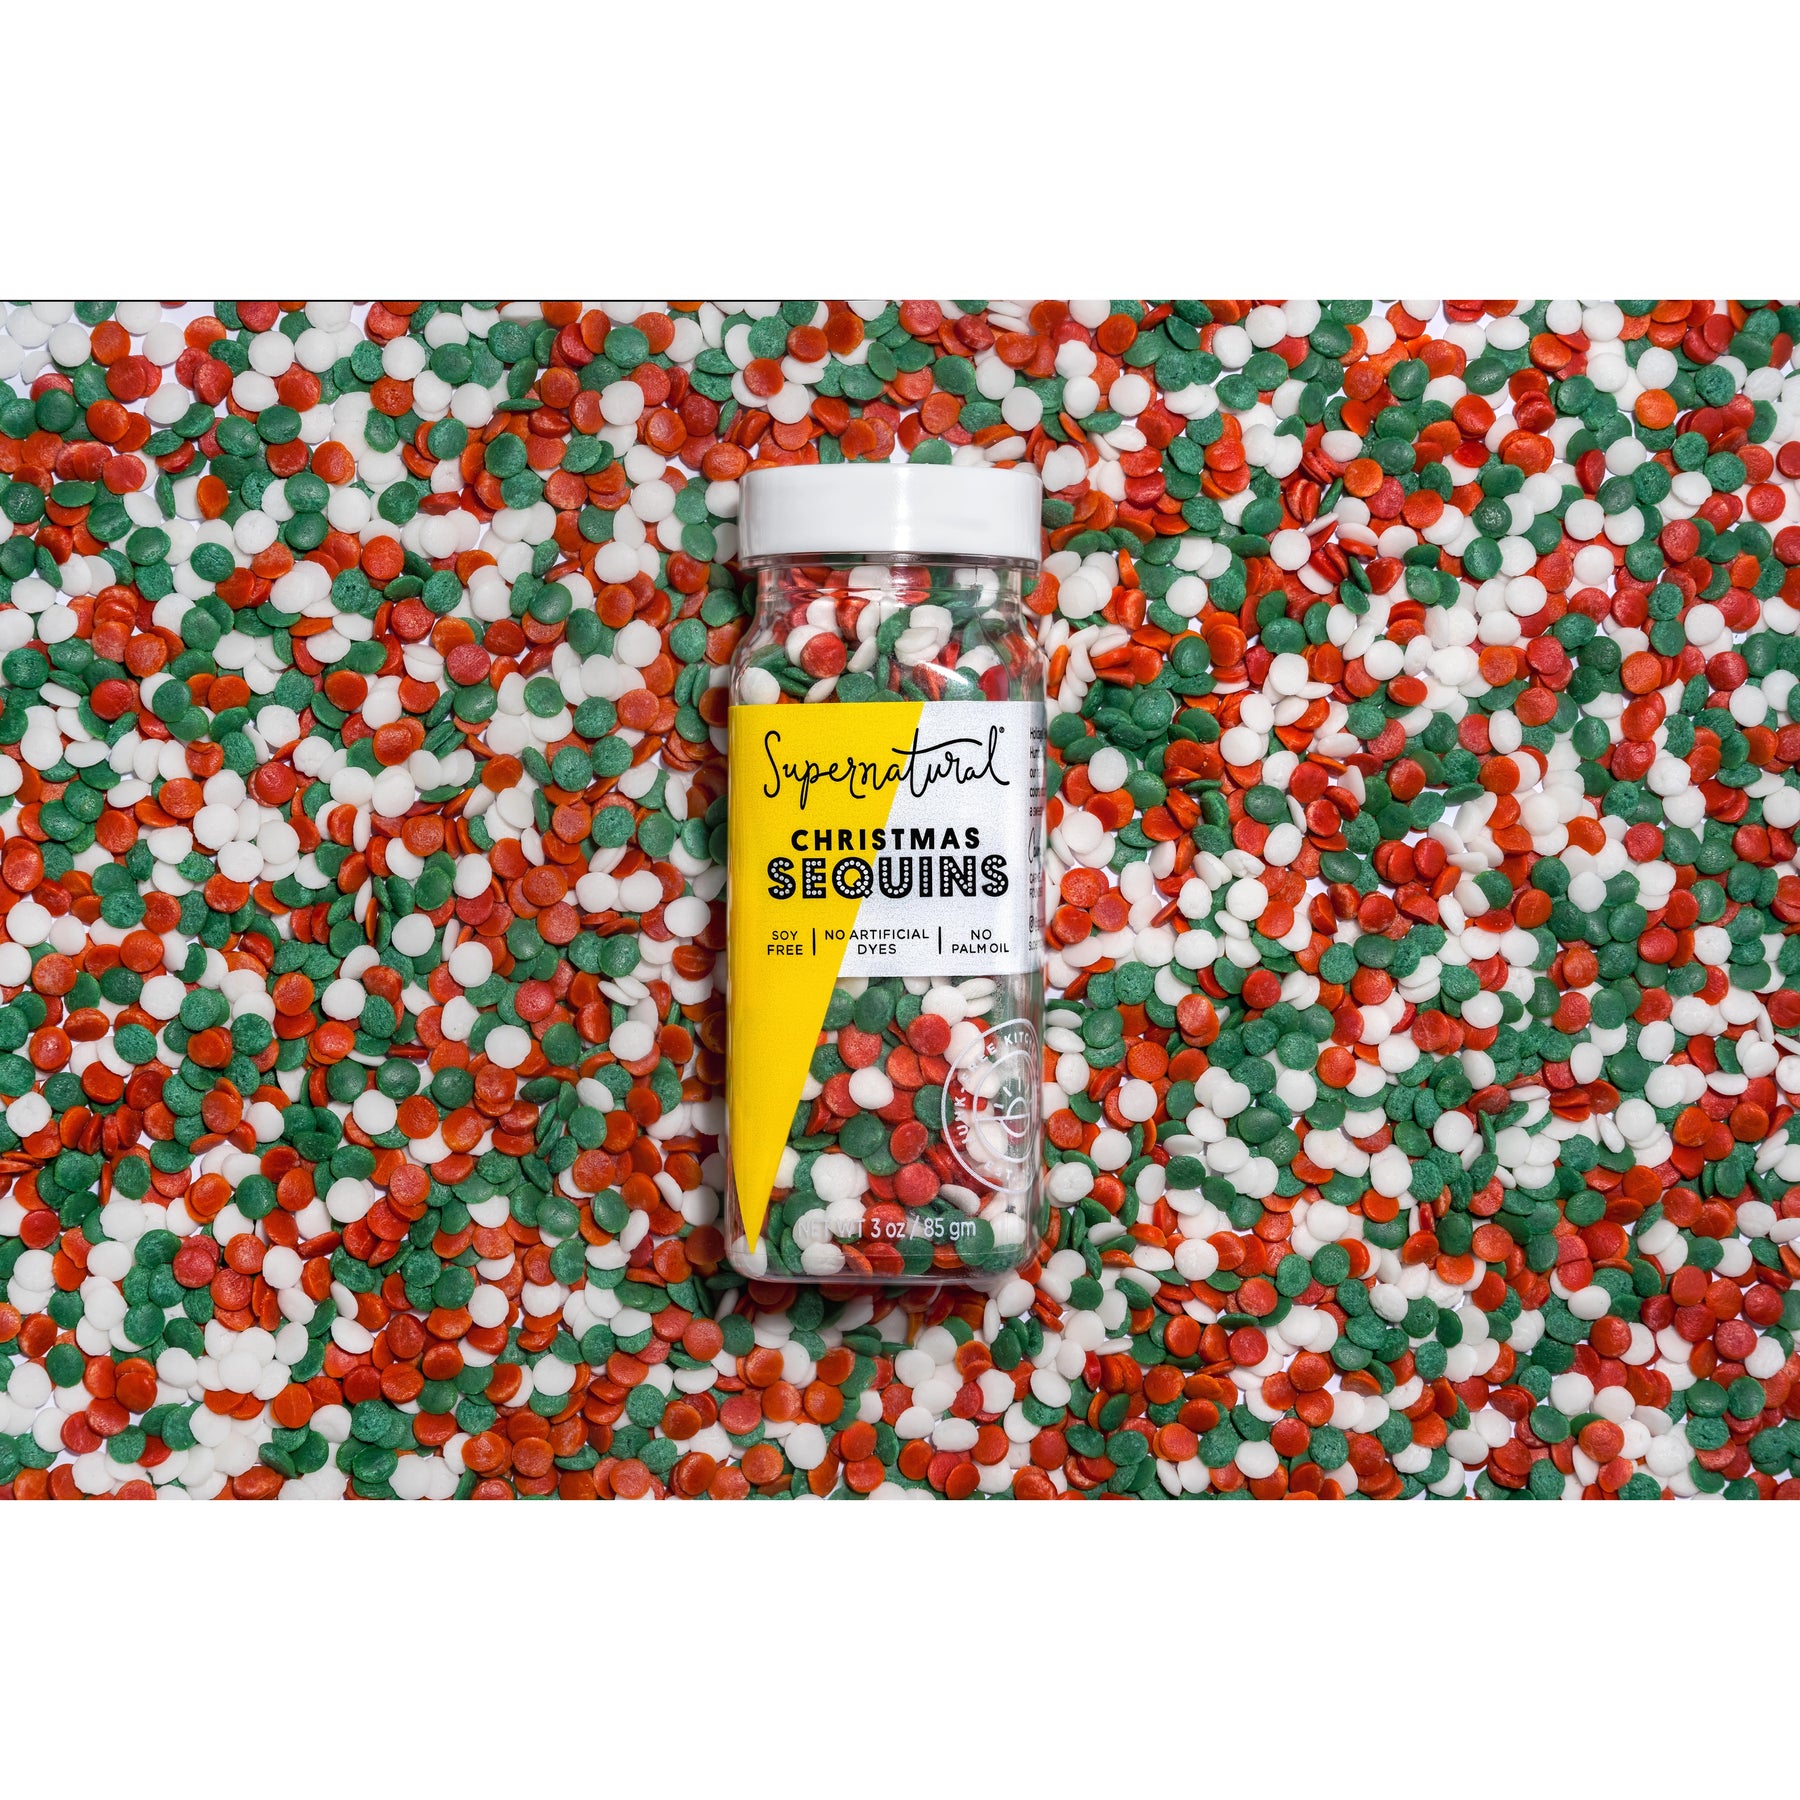 Dye-Free Christmas Sequins Sprinkles - Supernatural, Inc - Bluecashew Kitchen Homestead